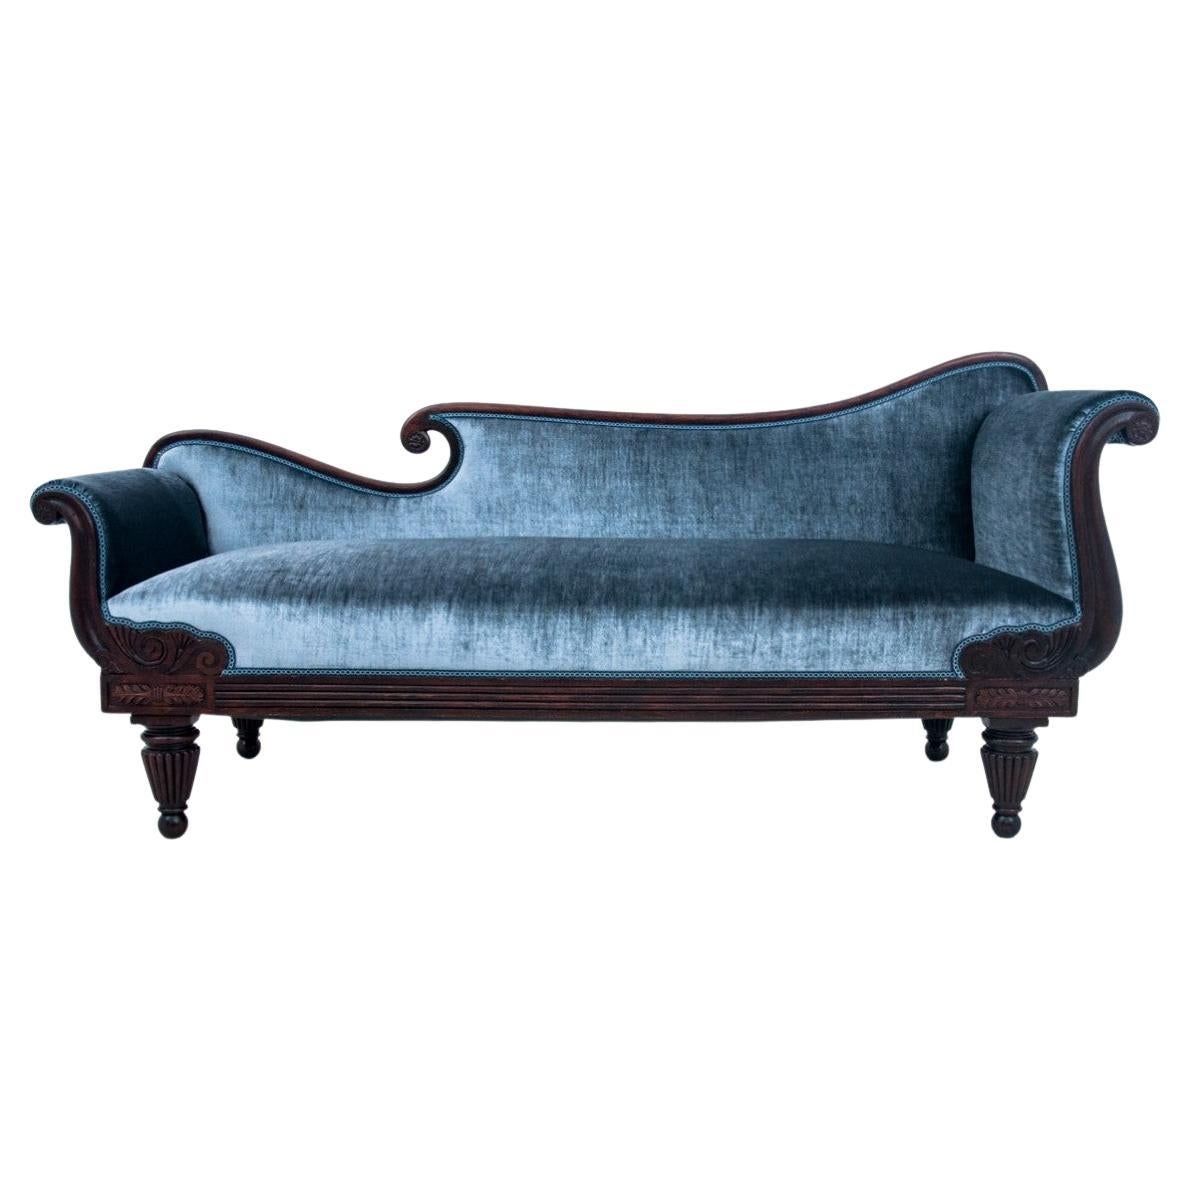 Blue Sofa Recamier, France, around 1830. After renovation.